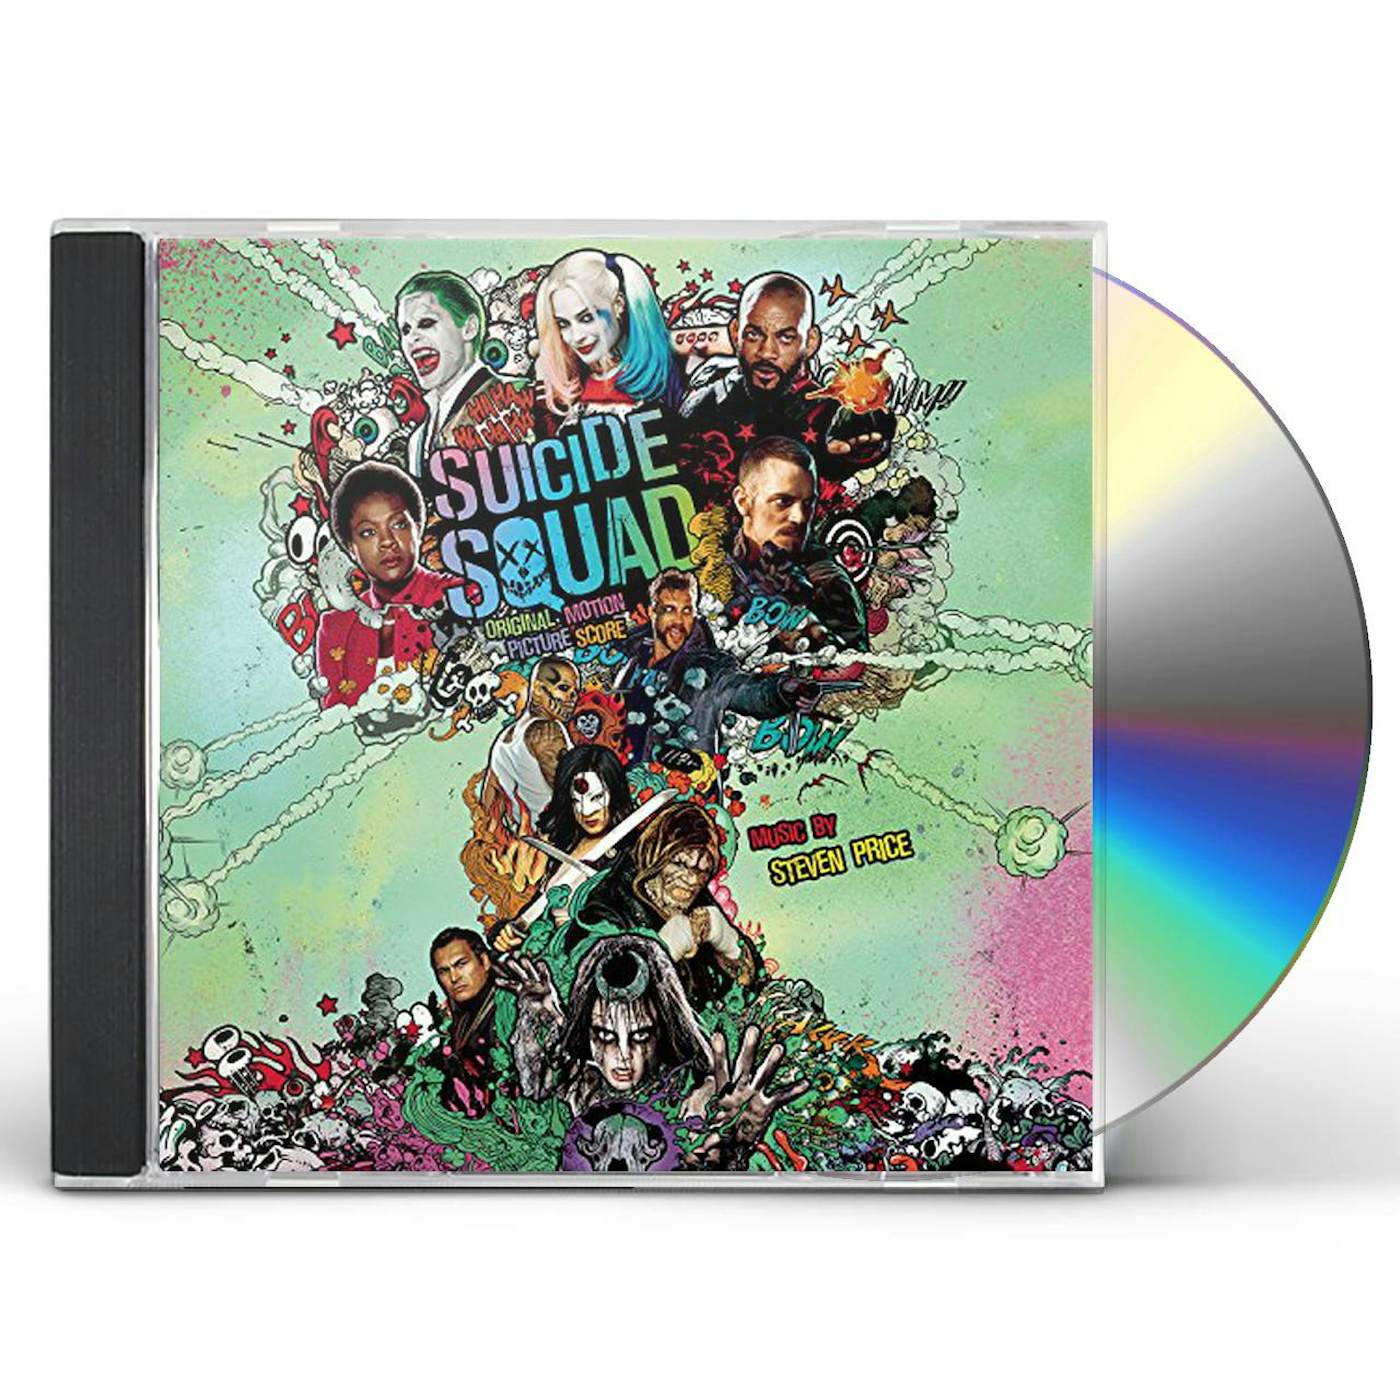 Steven Price SUICIDE SQUAD / Original Soundtrack CD